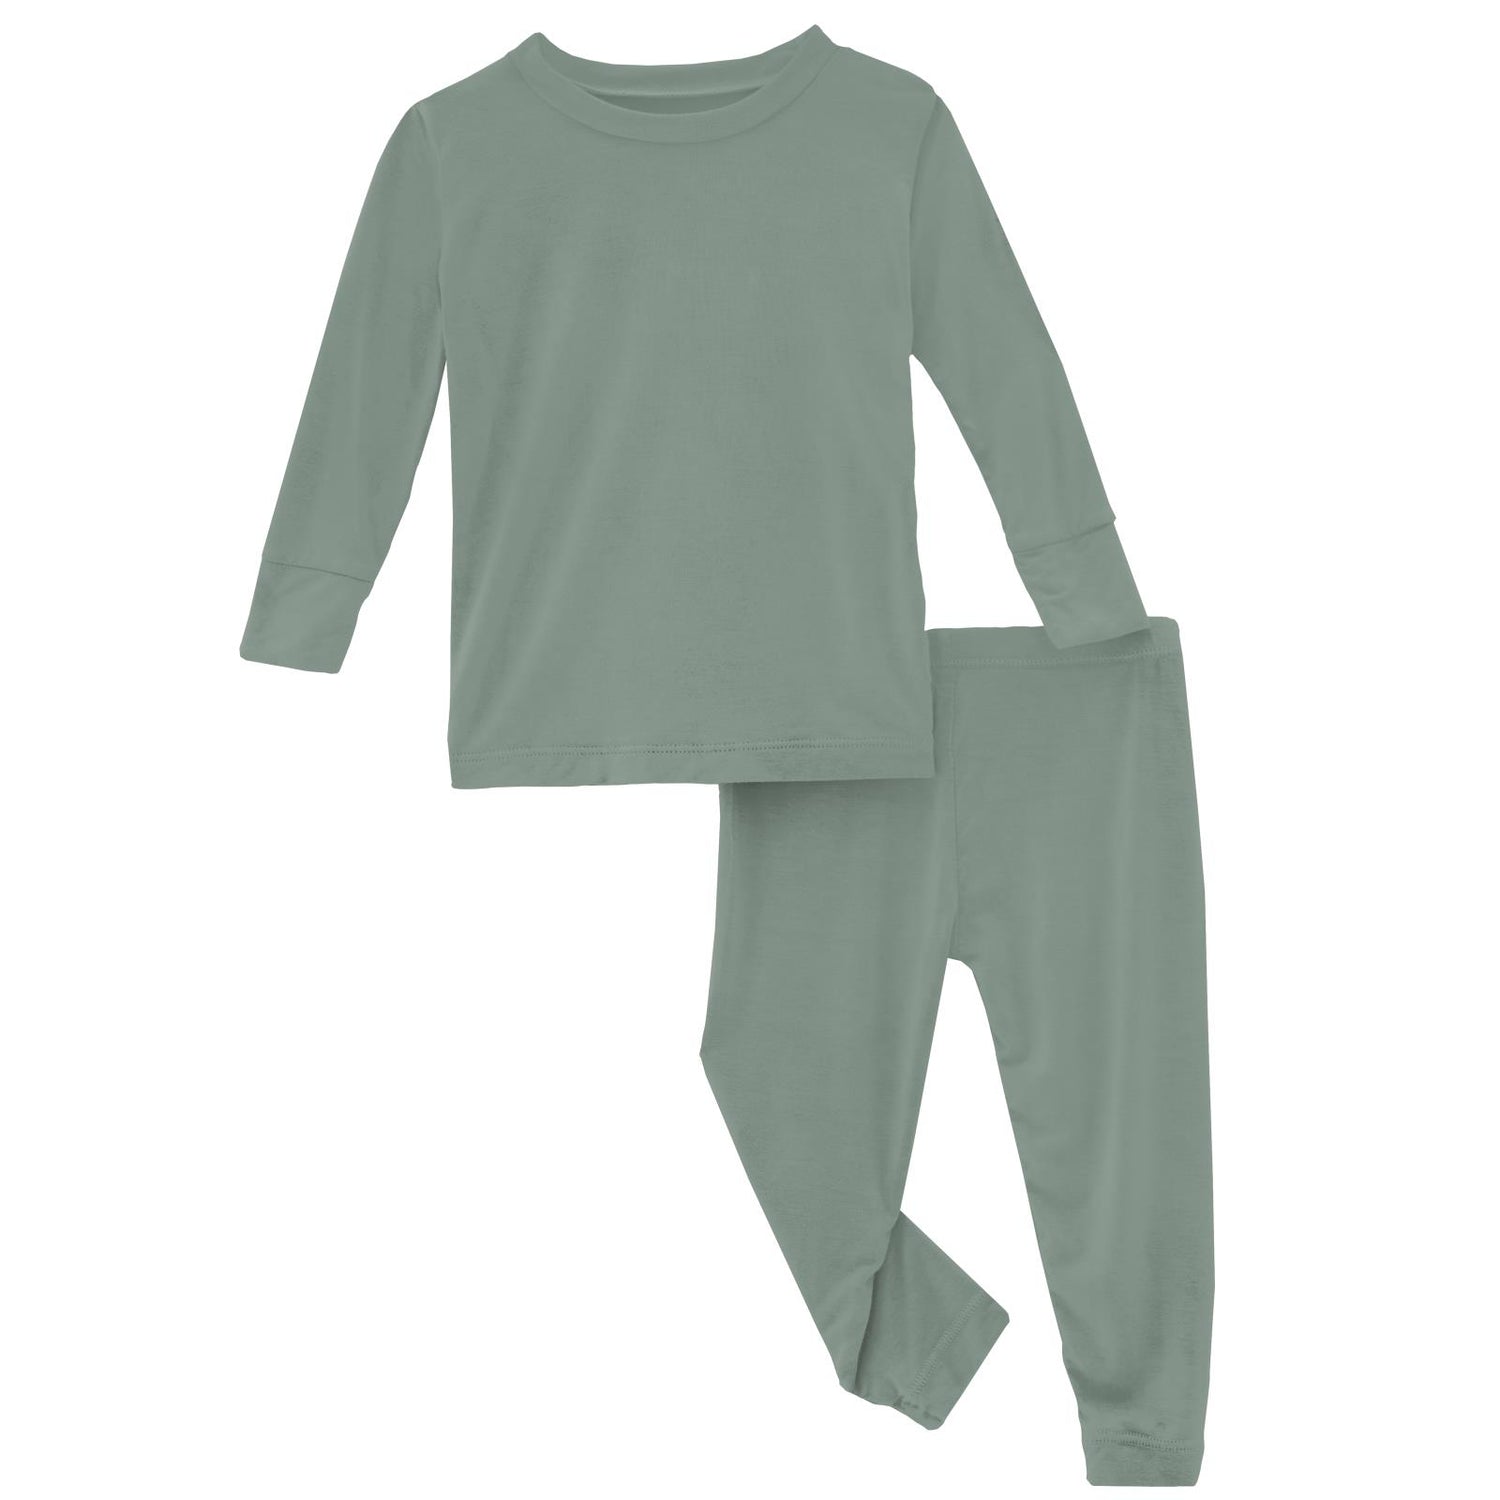 Long Sleeve Pajama Set in Lily Pad